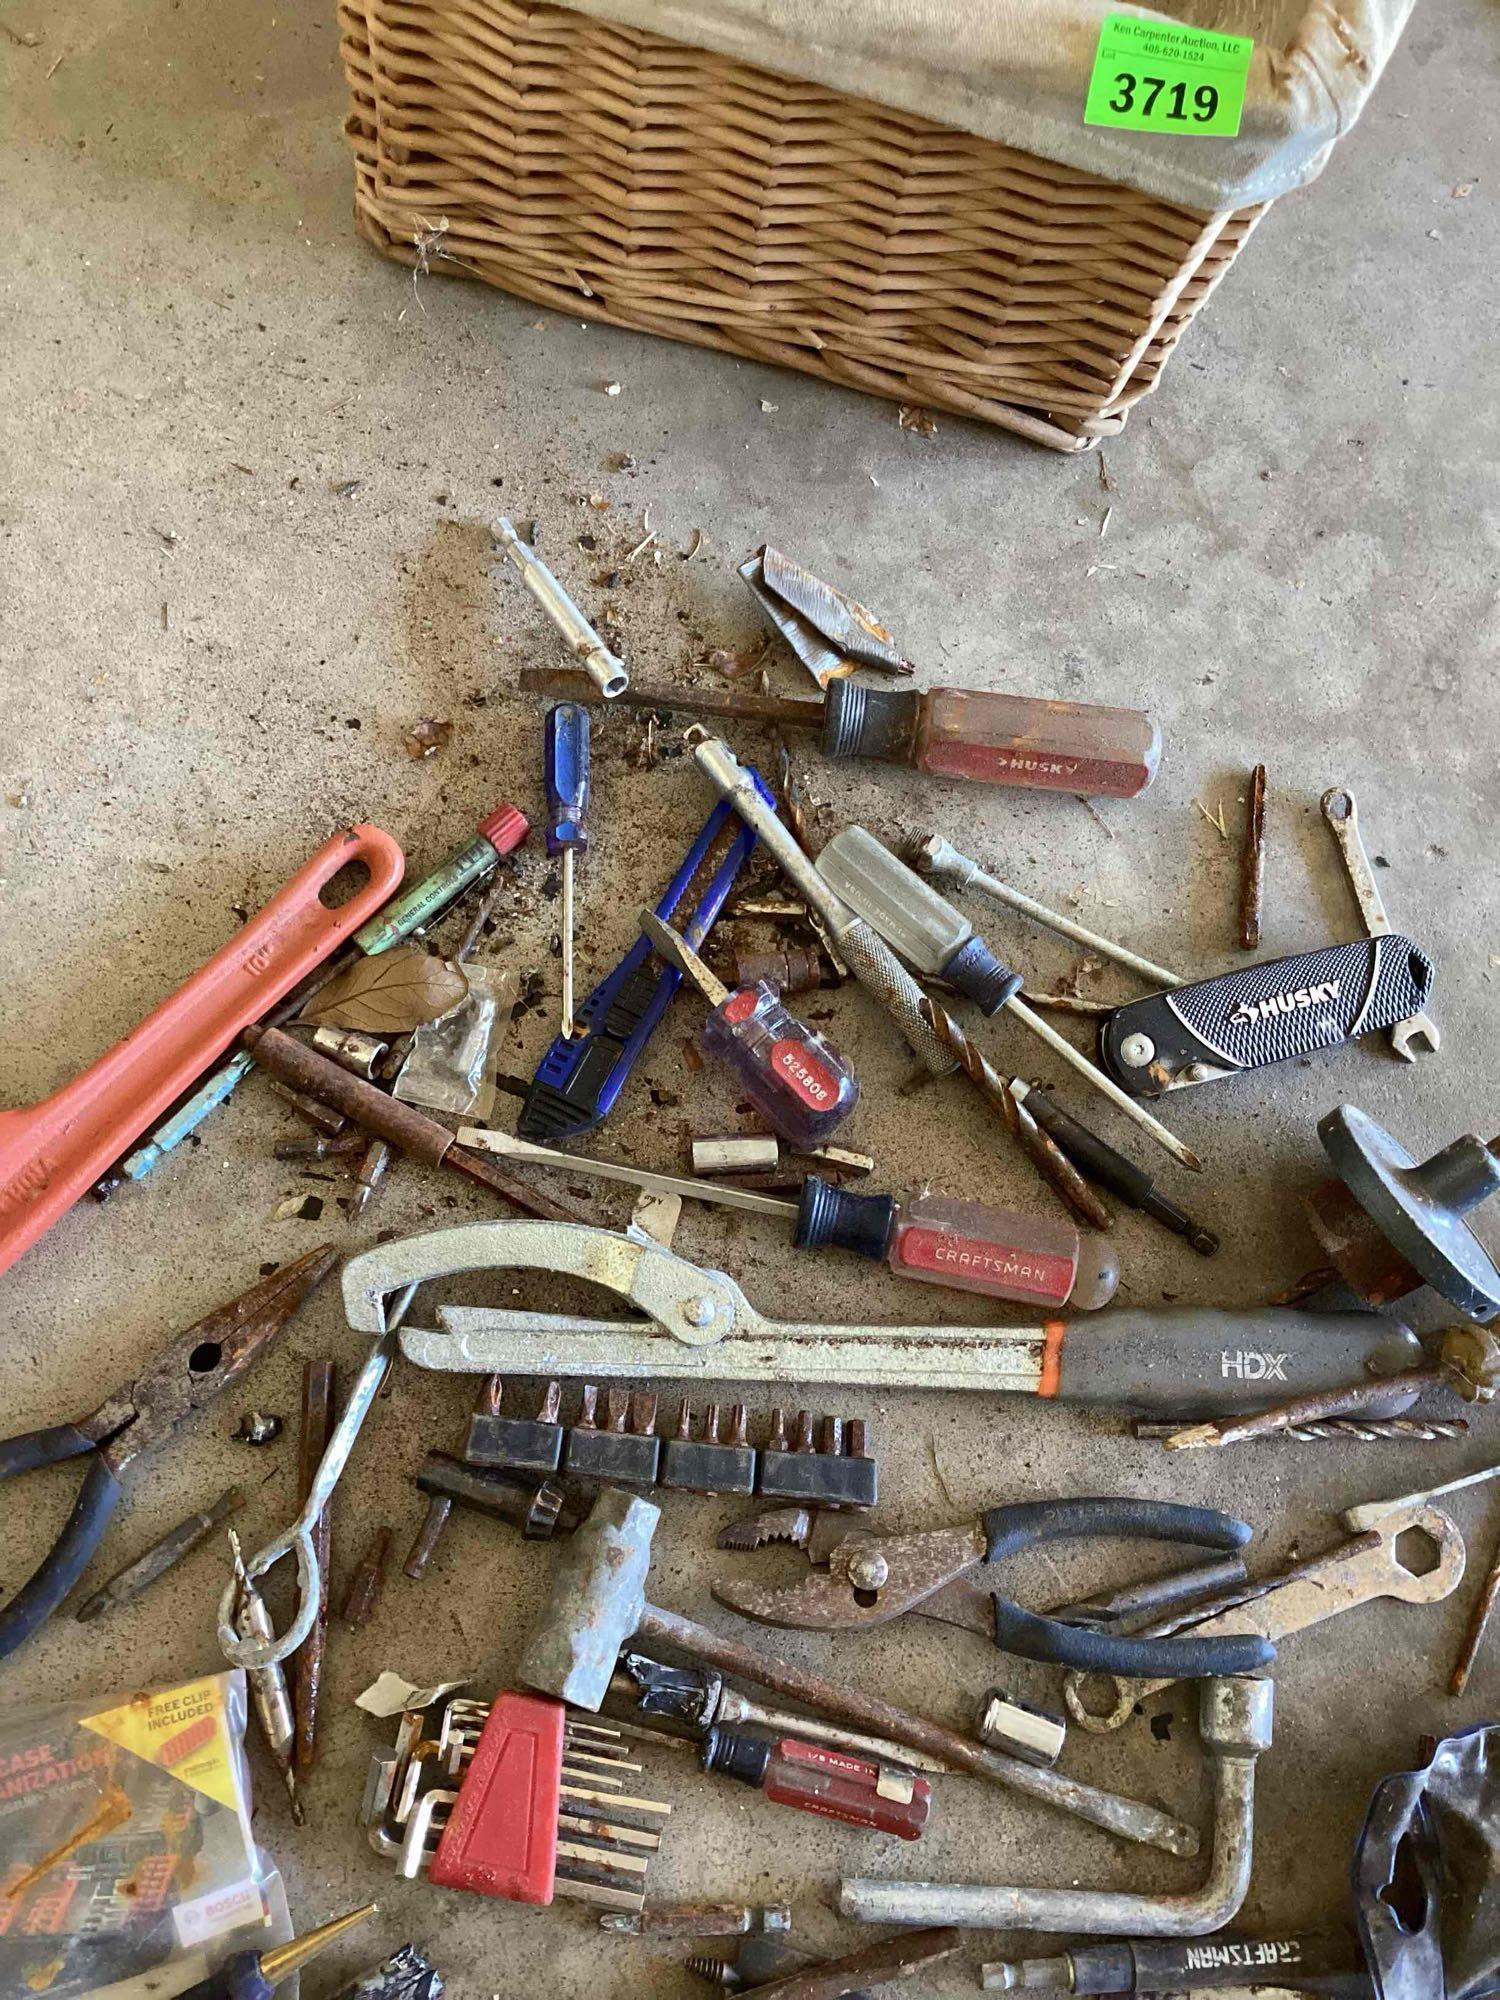 tool bundle